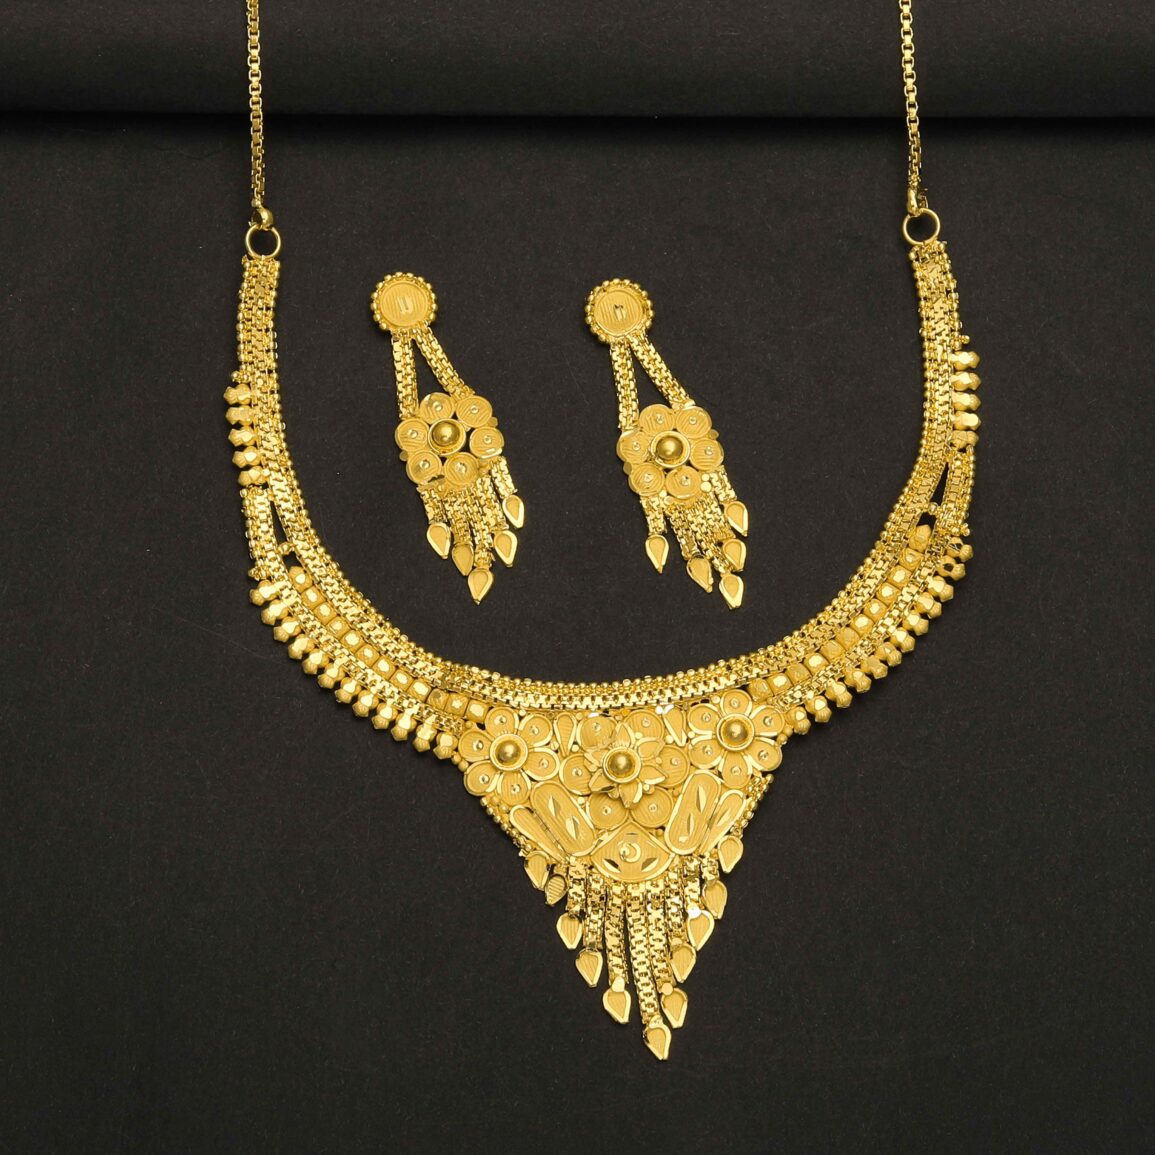 Bombay design 24k gold plated necklace set